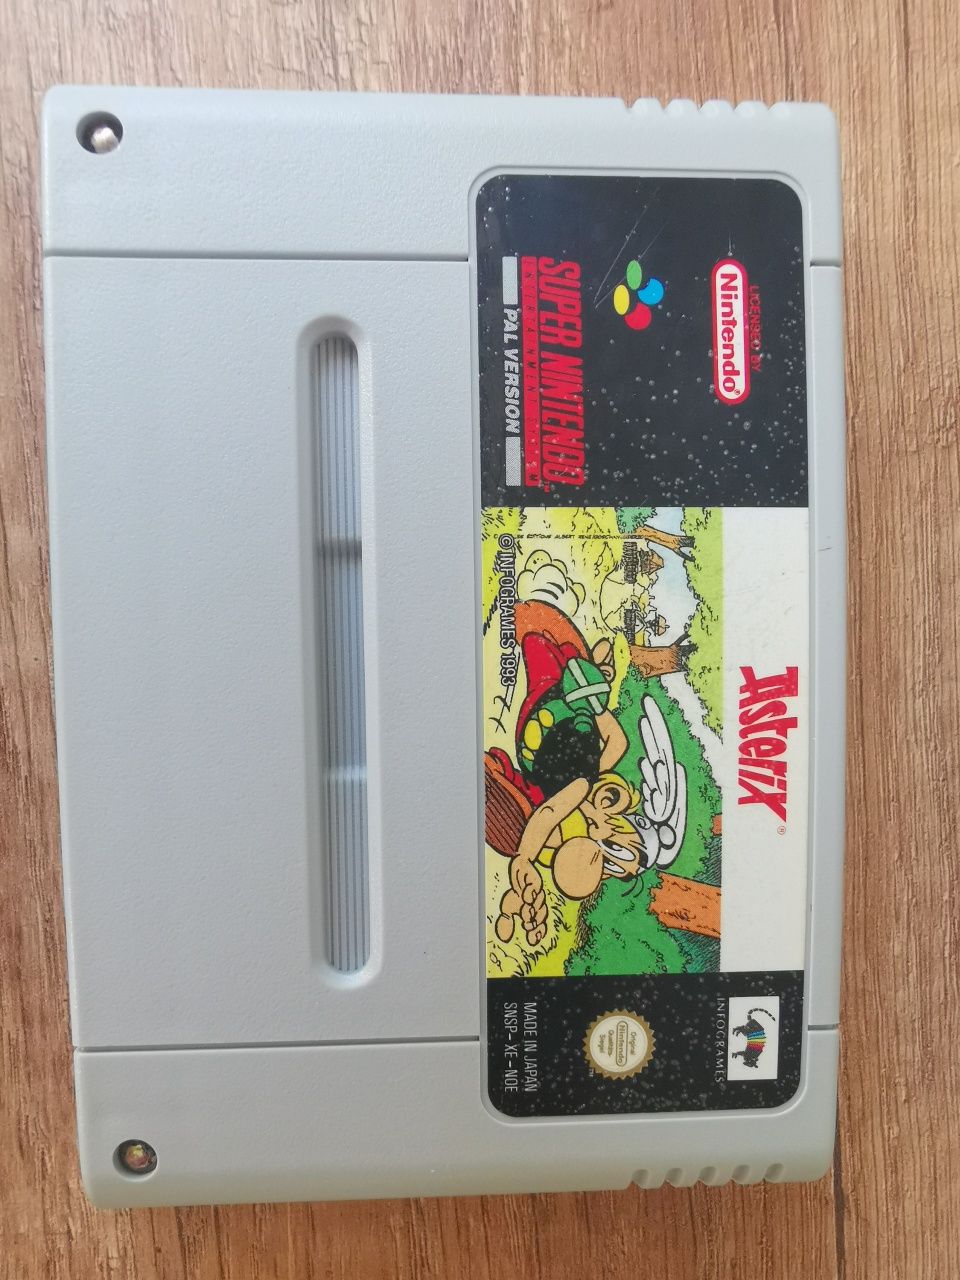 Gry kartridż Super Nintendo SNES 6 sztuk Legend of Zelda